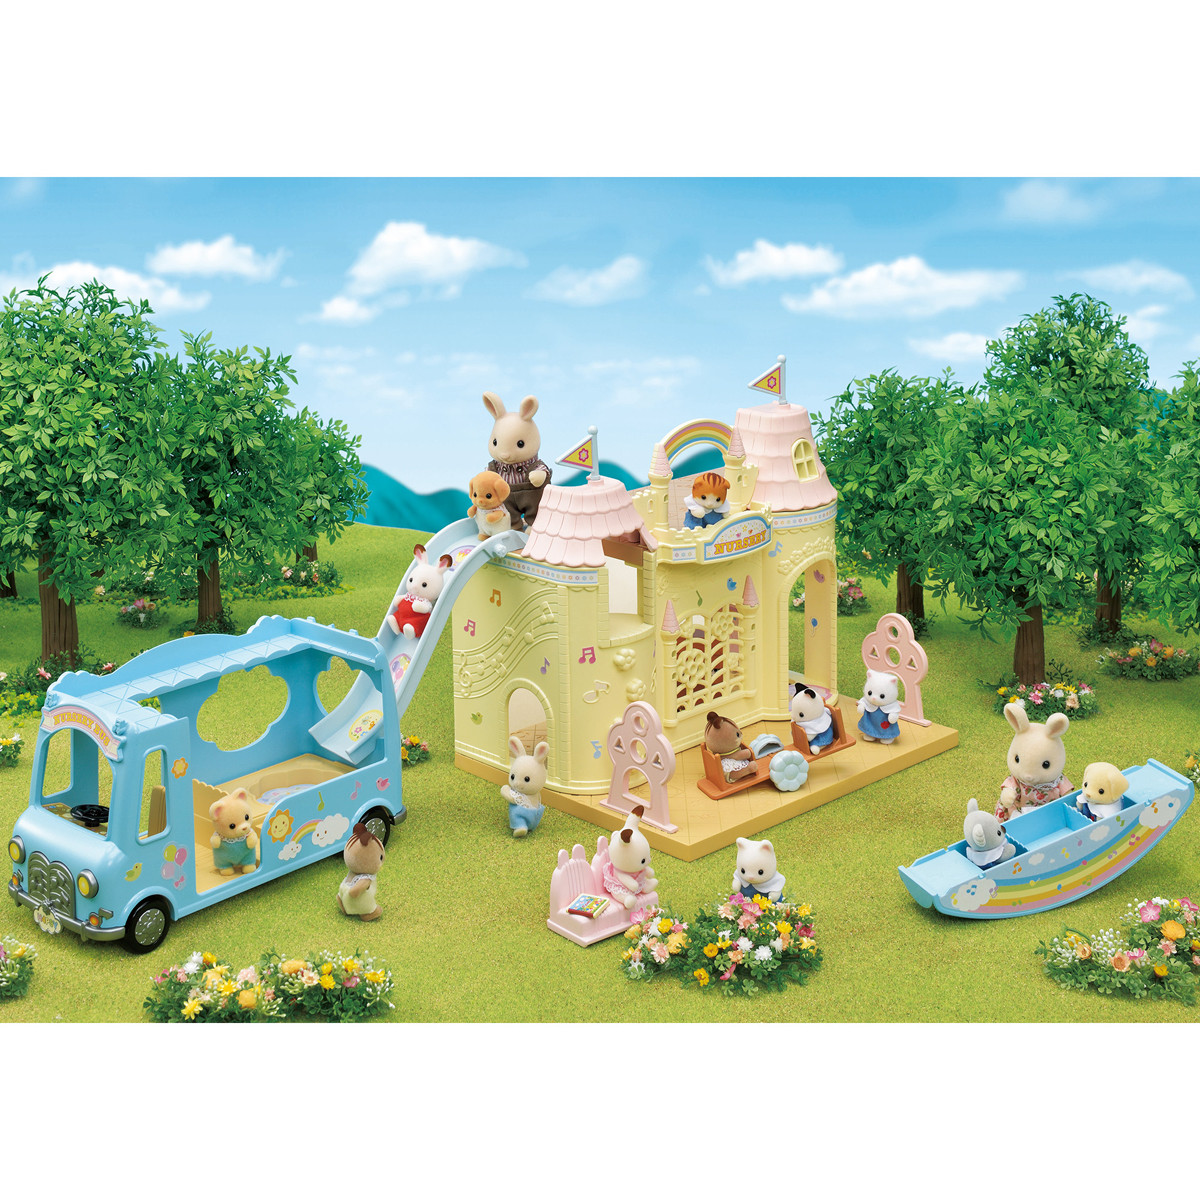 Sunshine Nursery Bus - Sylvanian Families →